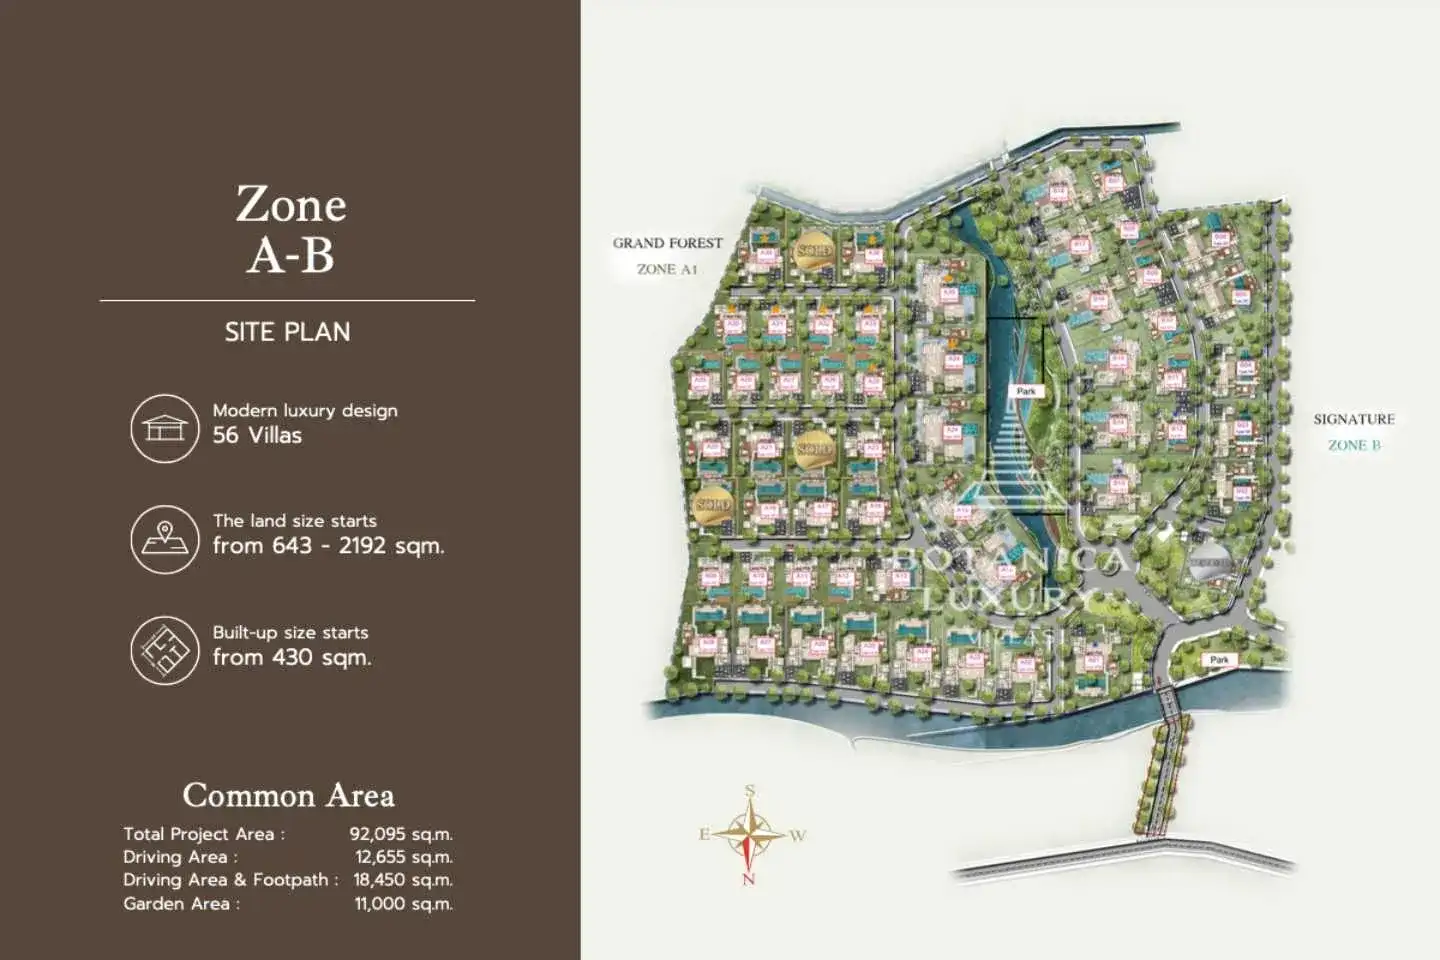 Masterplan with Zones